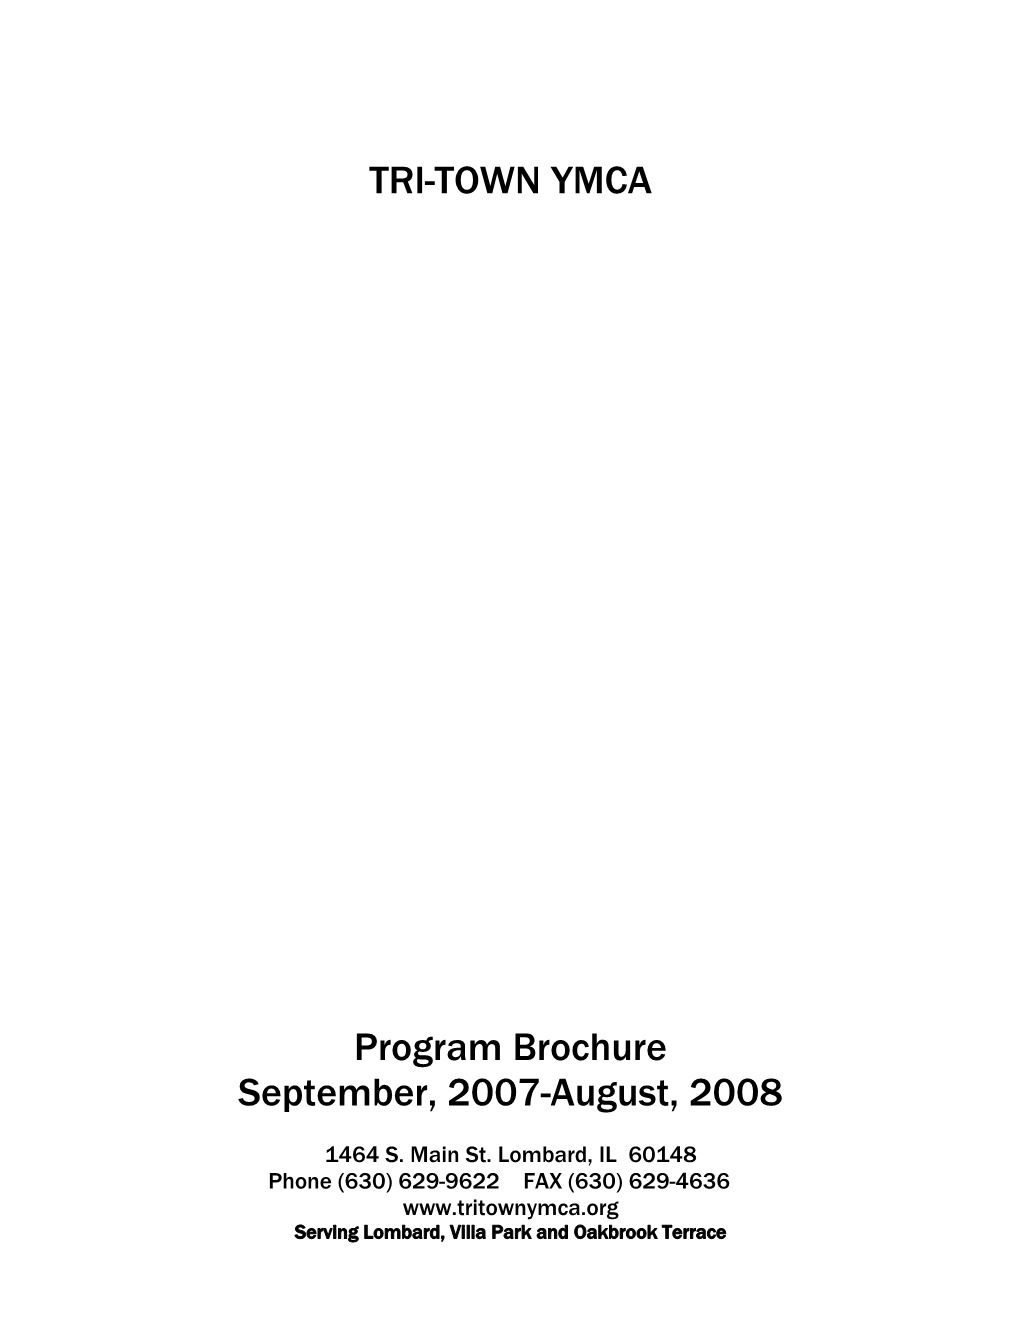 Tri-Town Ymca